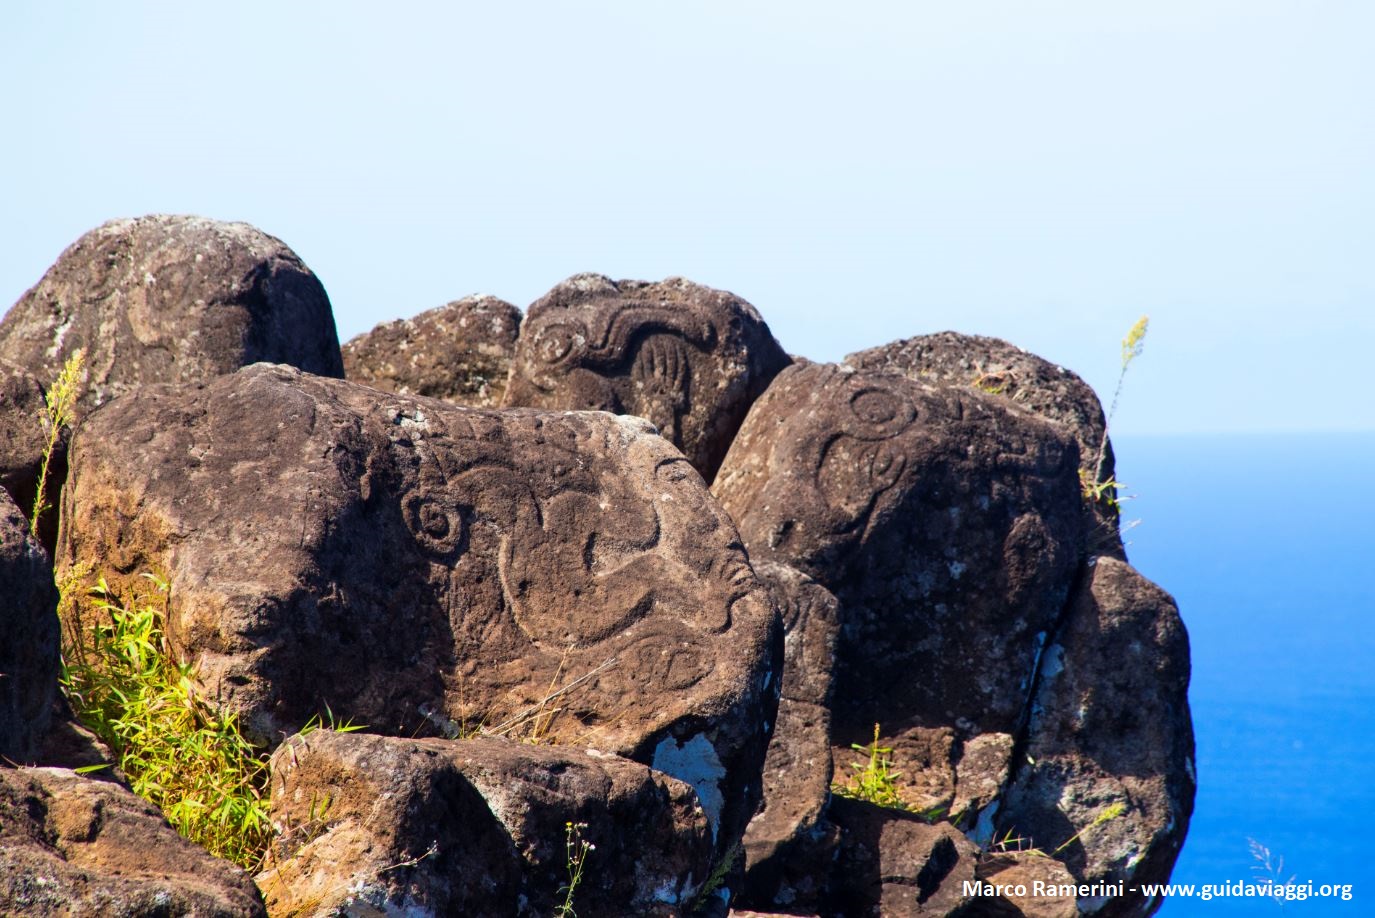 Orongo, Easter Island, Chile. Author and Copyright Marco Ramerini